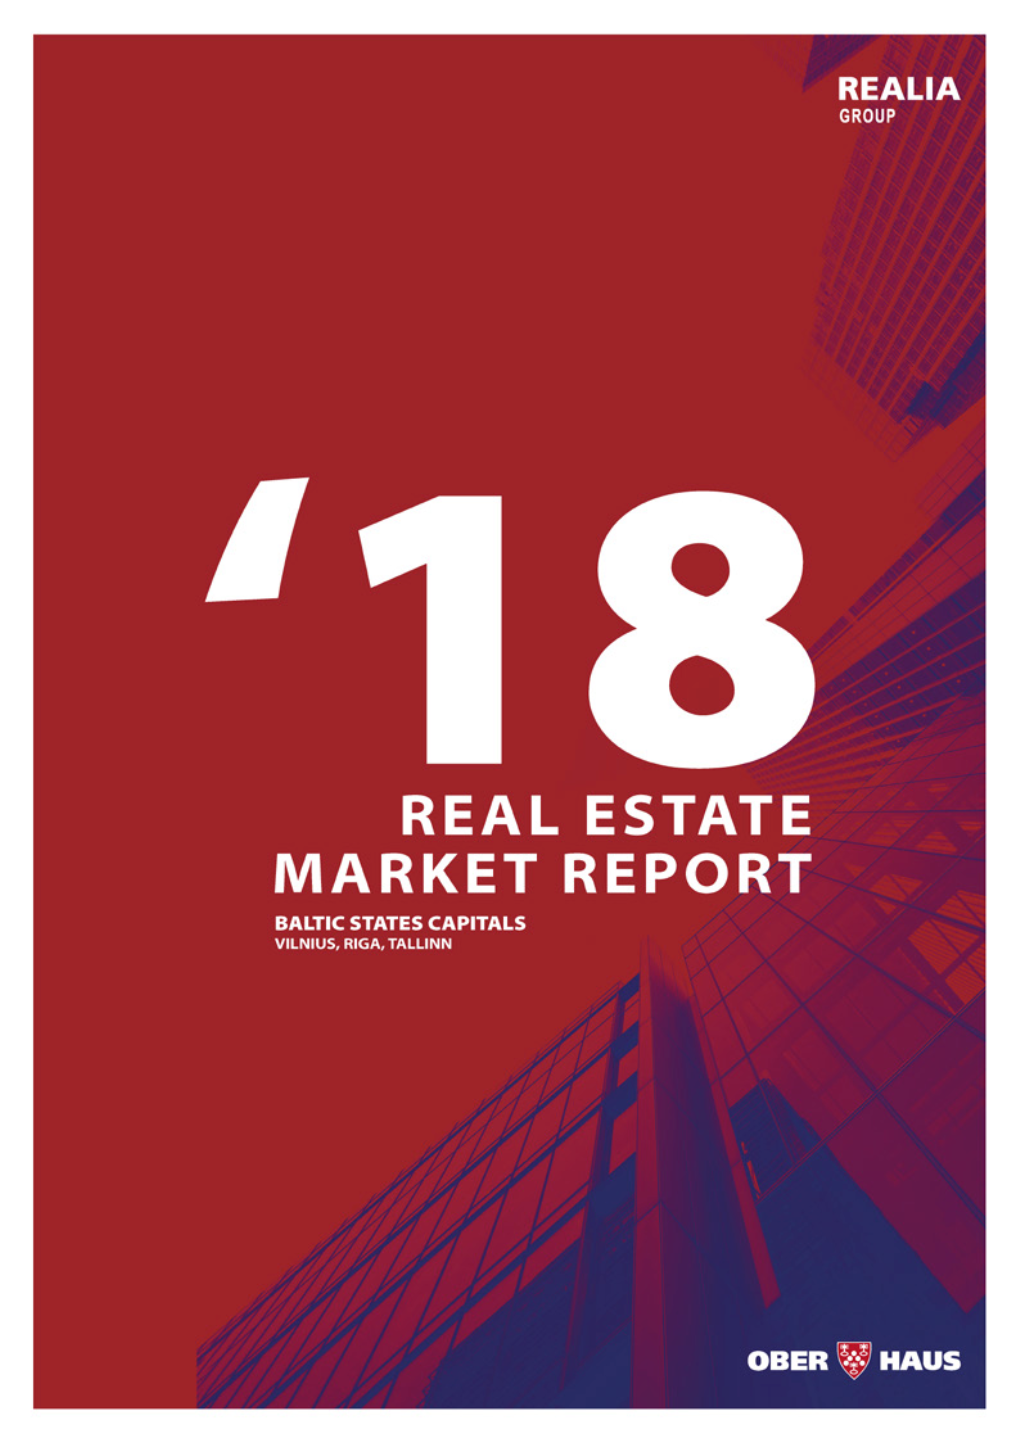 Ober-Haus Real Estate Market Report 2018